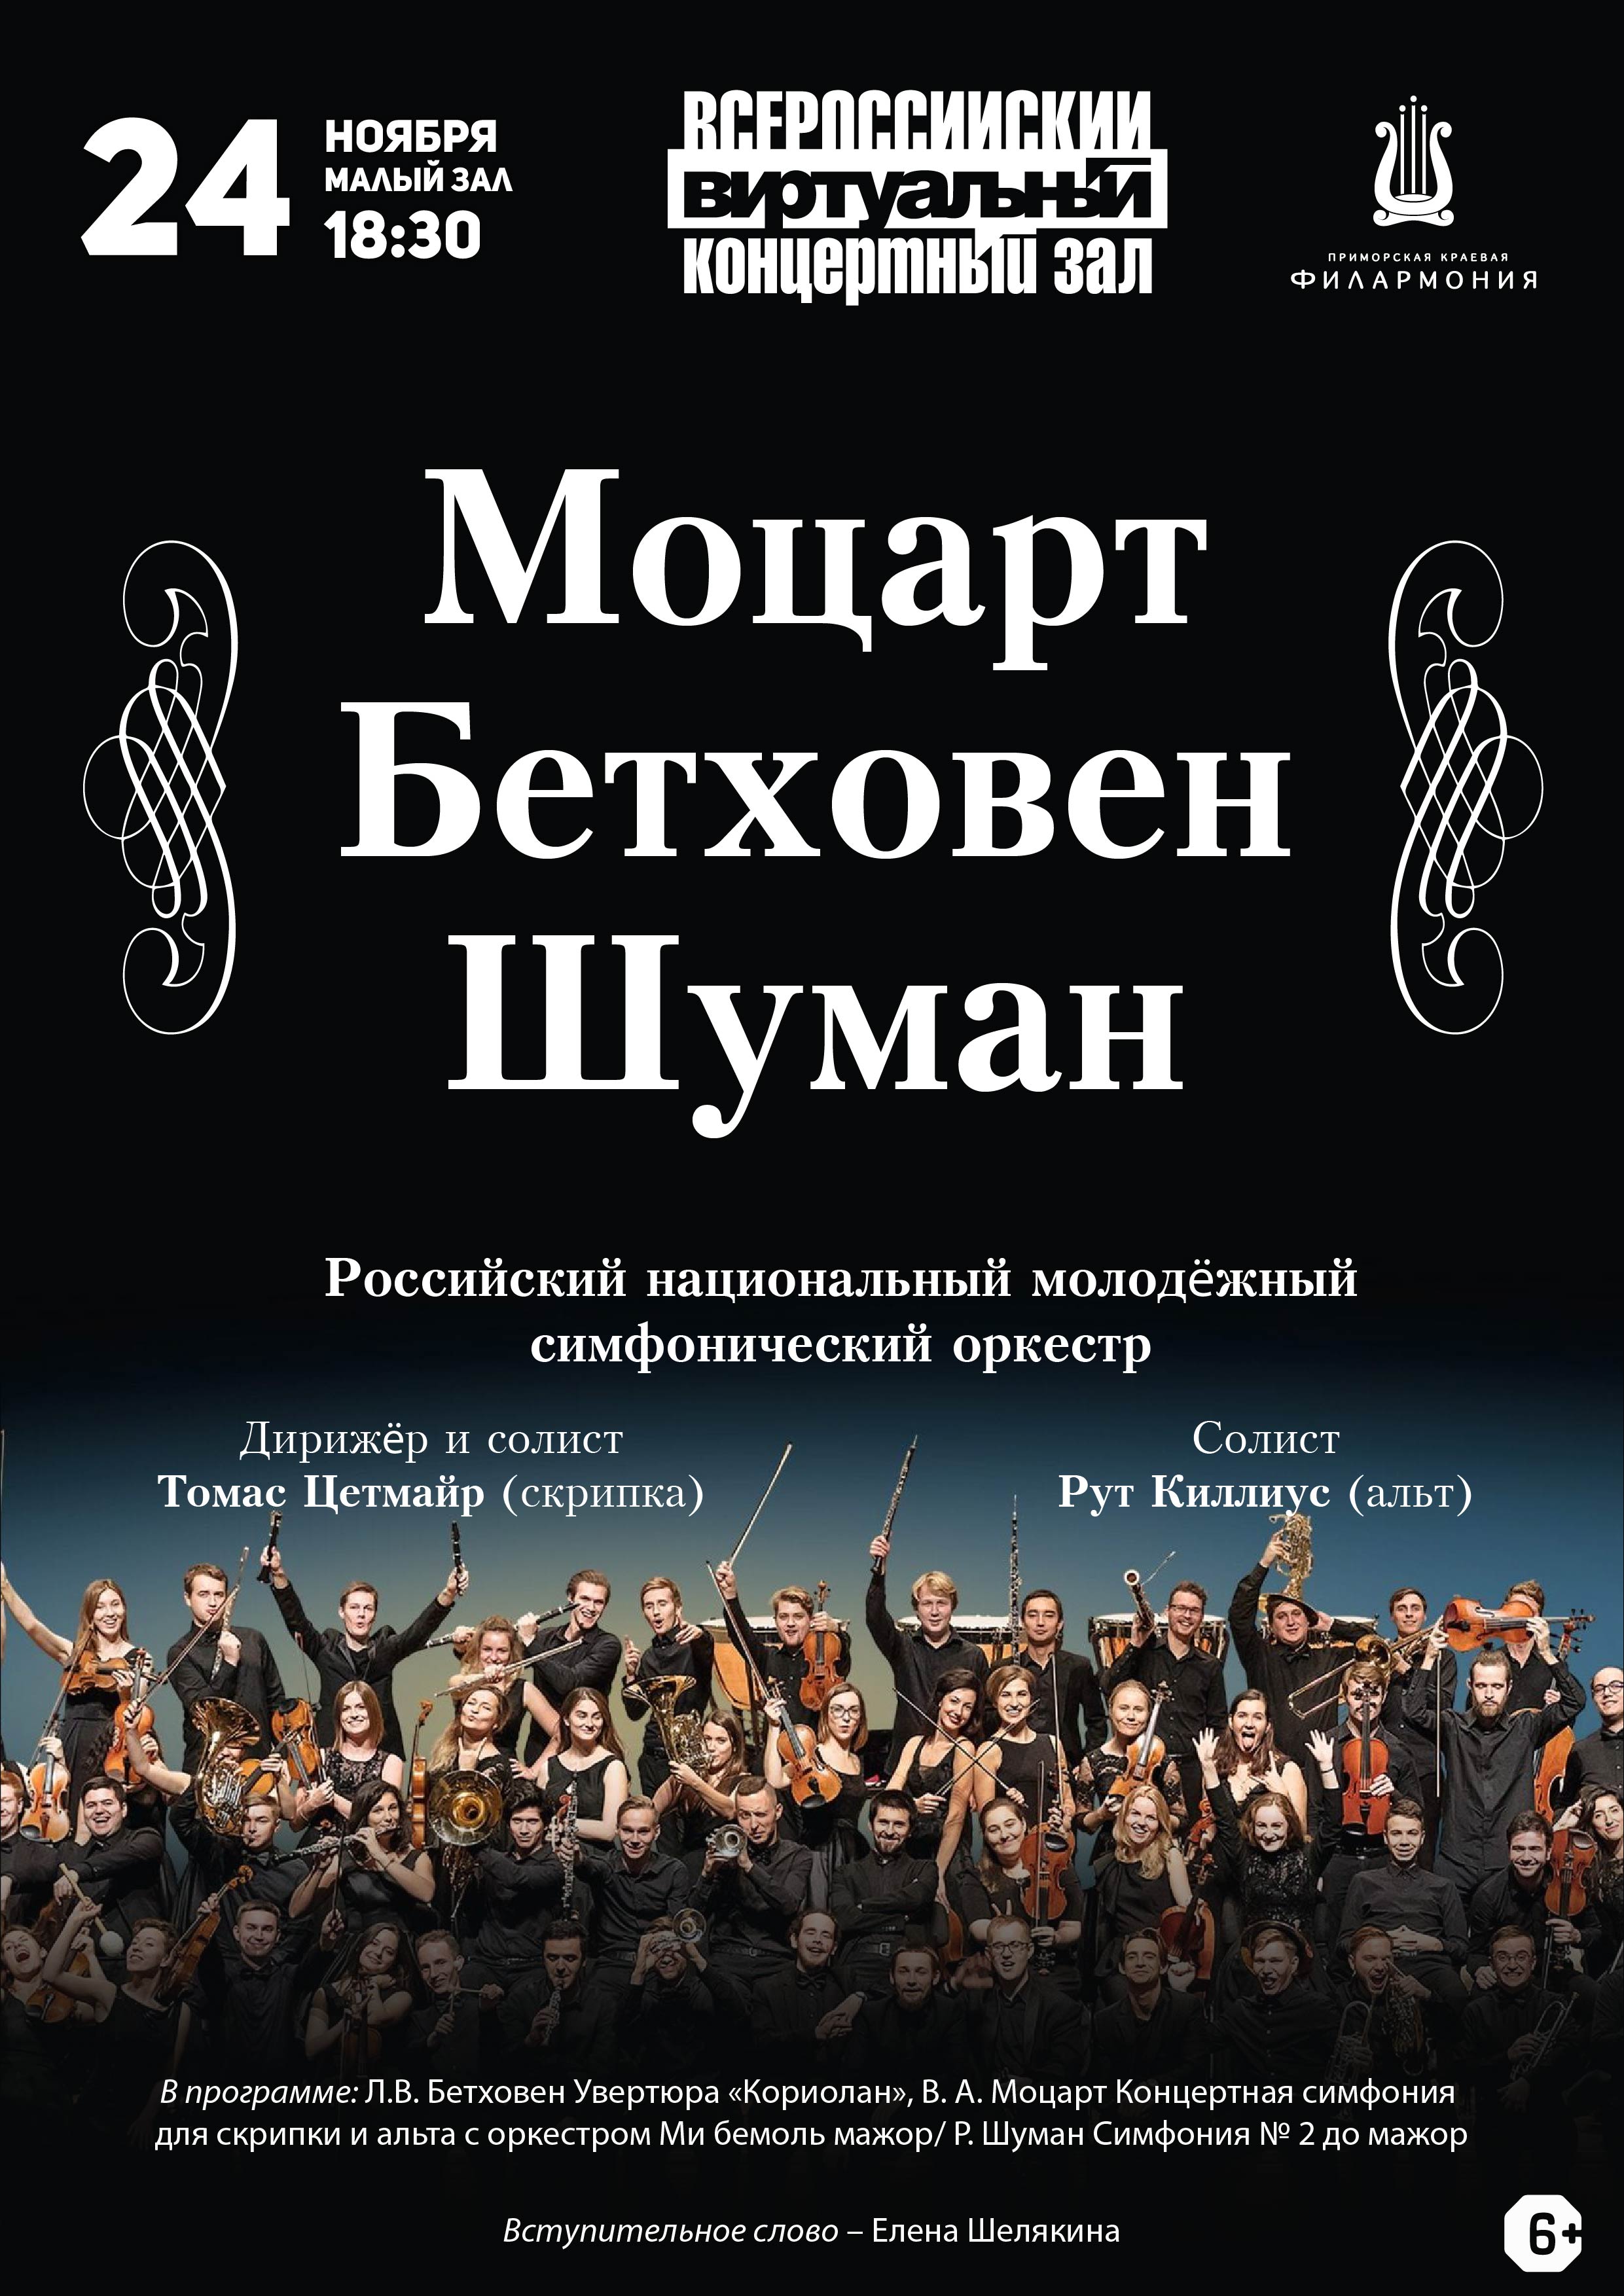 24 ноября Виртуальный концертный зал  Концертная программа «Моцарт. Бетховен. Шуман»